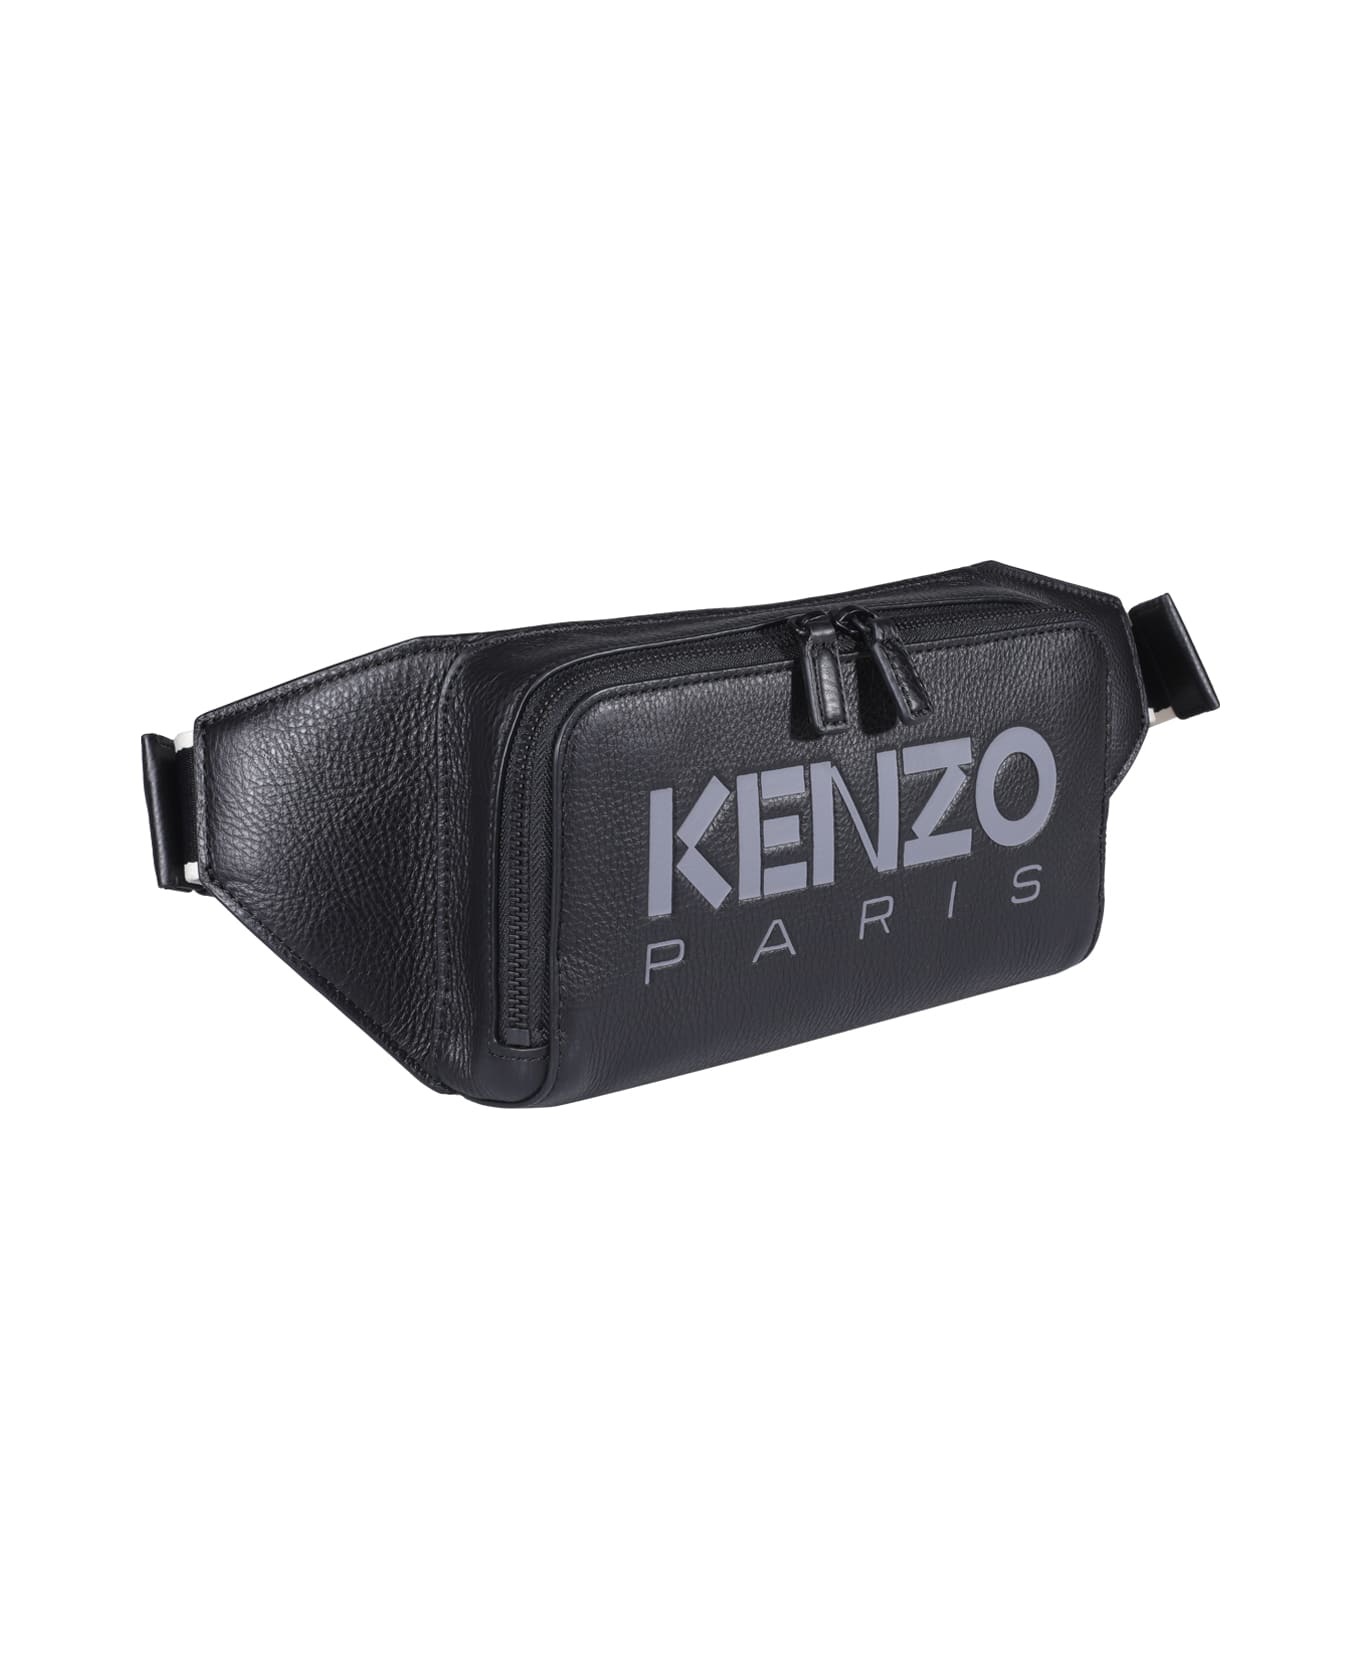 Kenzo Paris Leather Belt Bag - Black